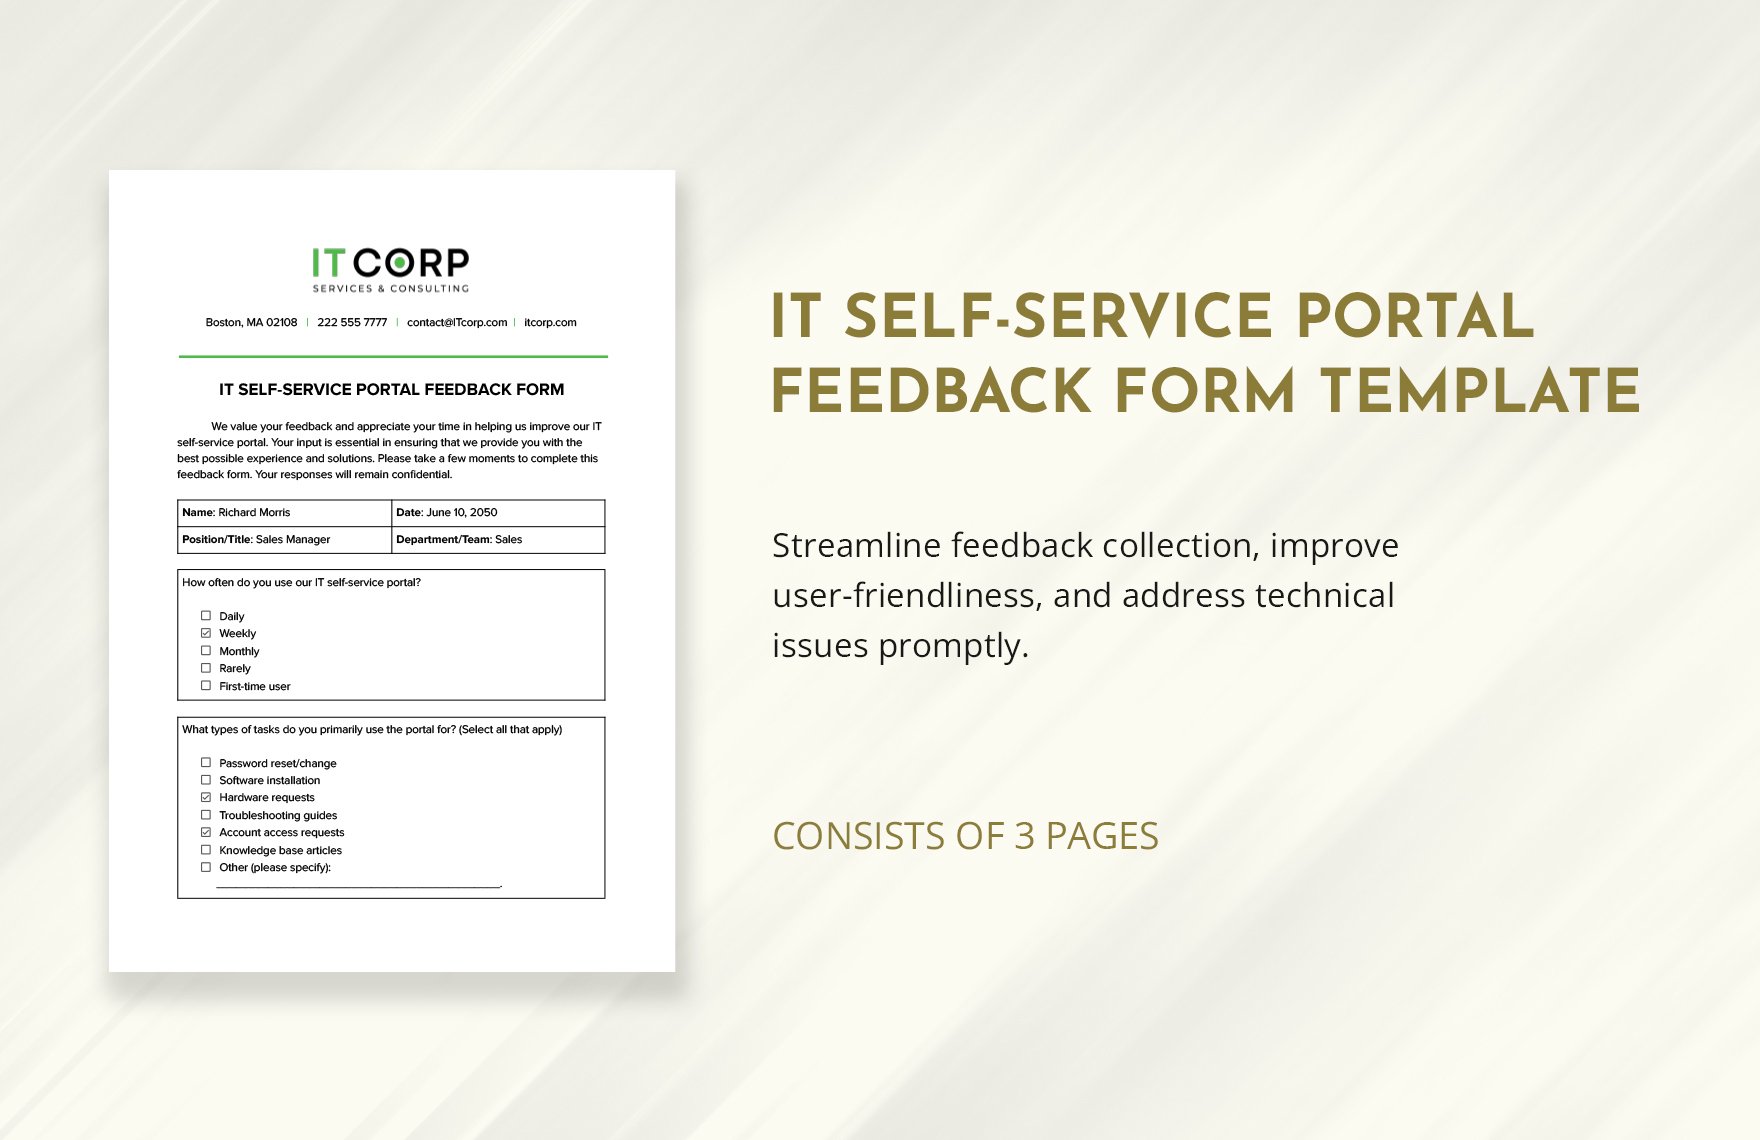 IT Self-service Portal Feedback Form Template